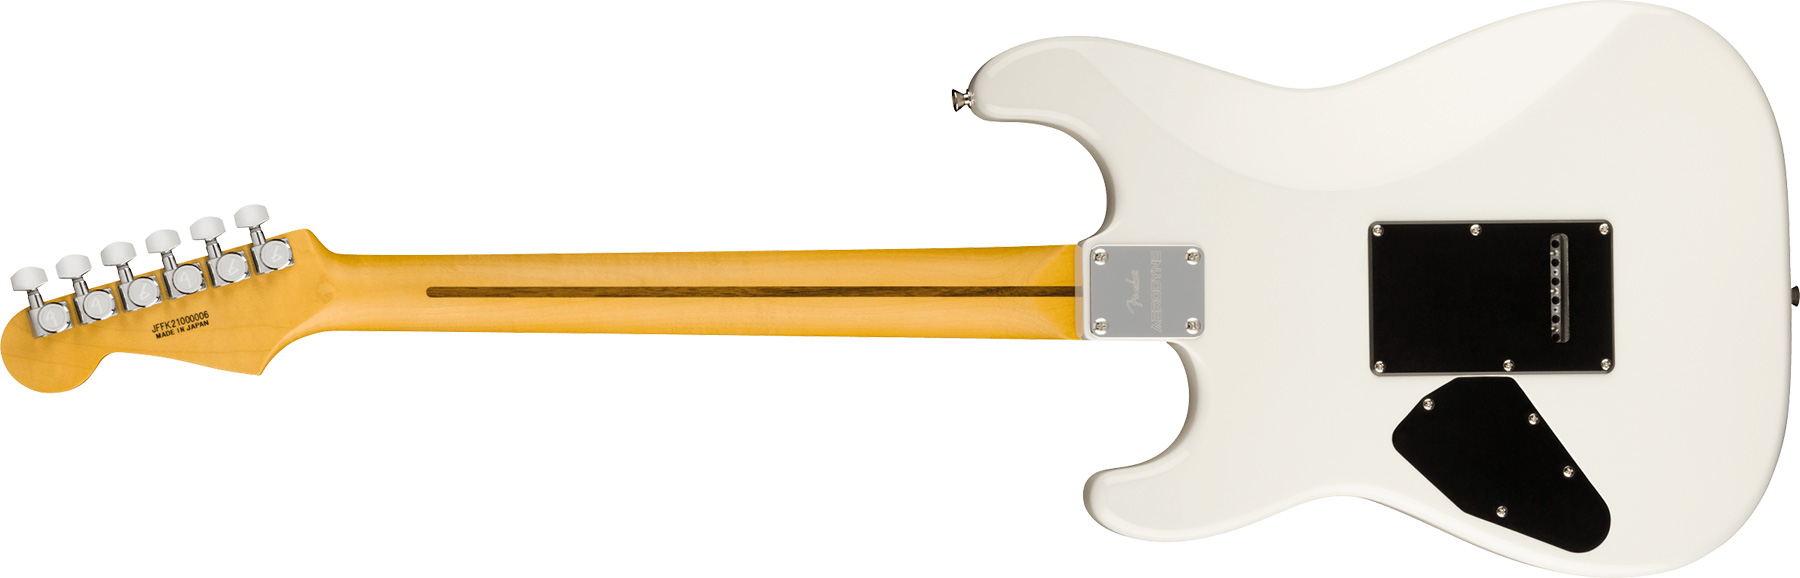 Fender Strat Aerodyne Special Jap 3s Trem Rw - Bright White - E-Gitarre in Str-Form - Variation 1